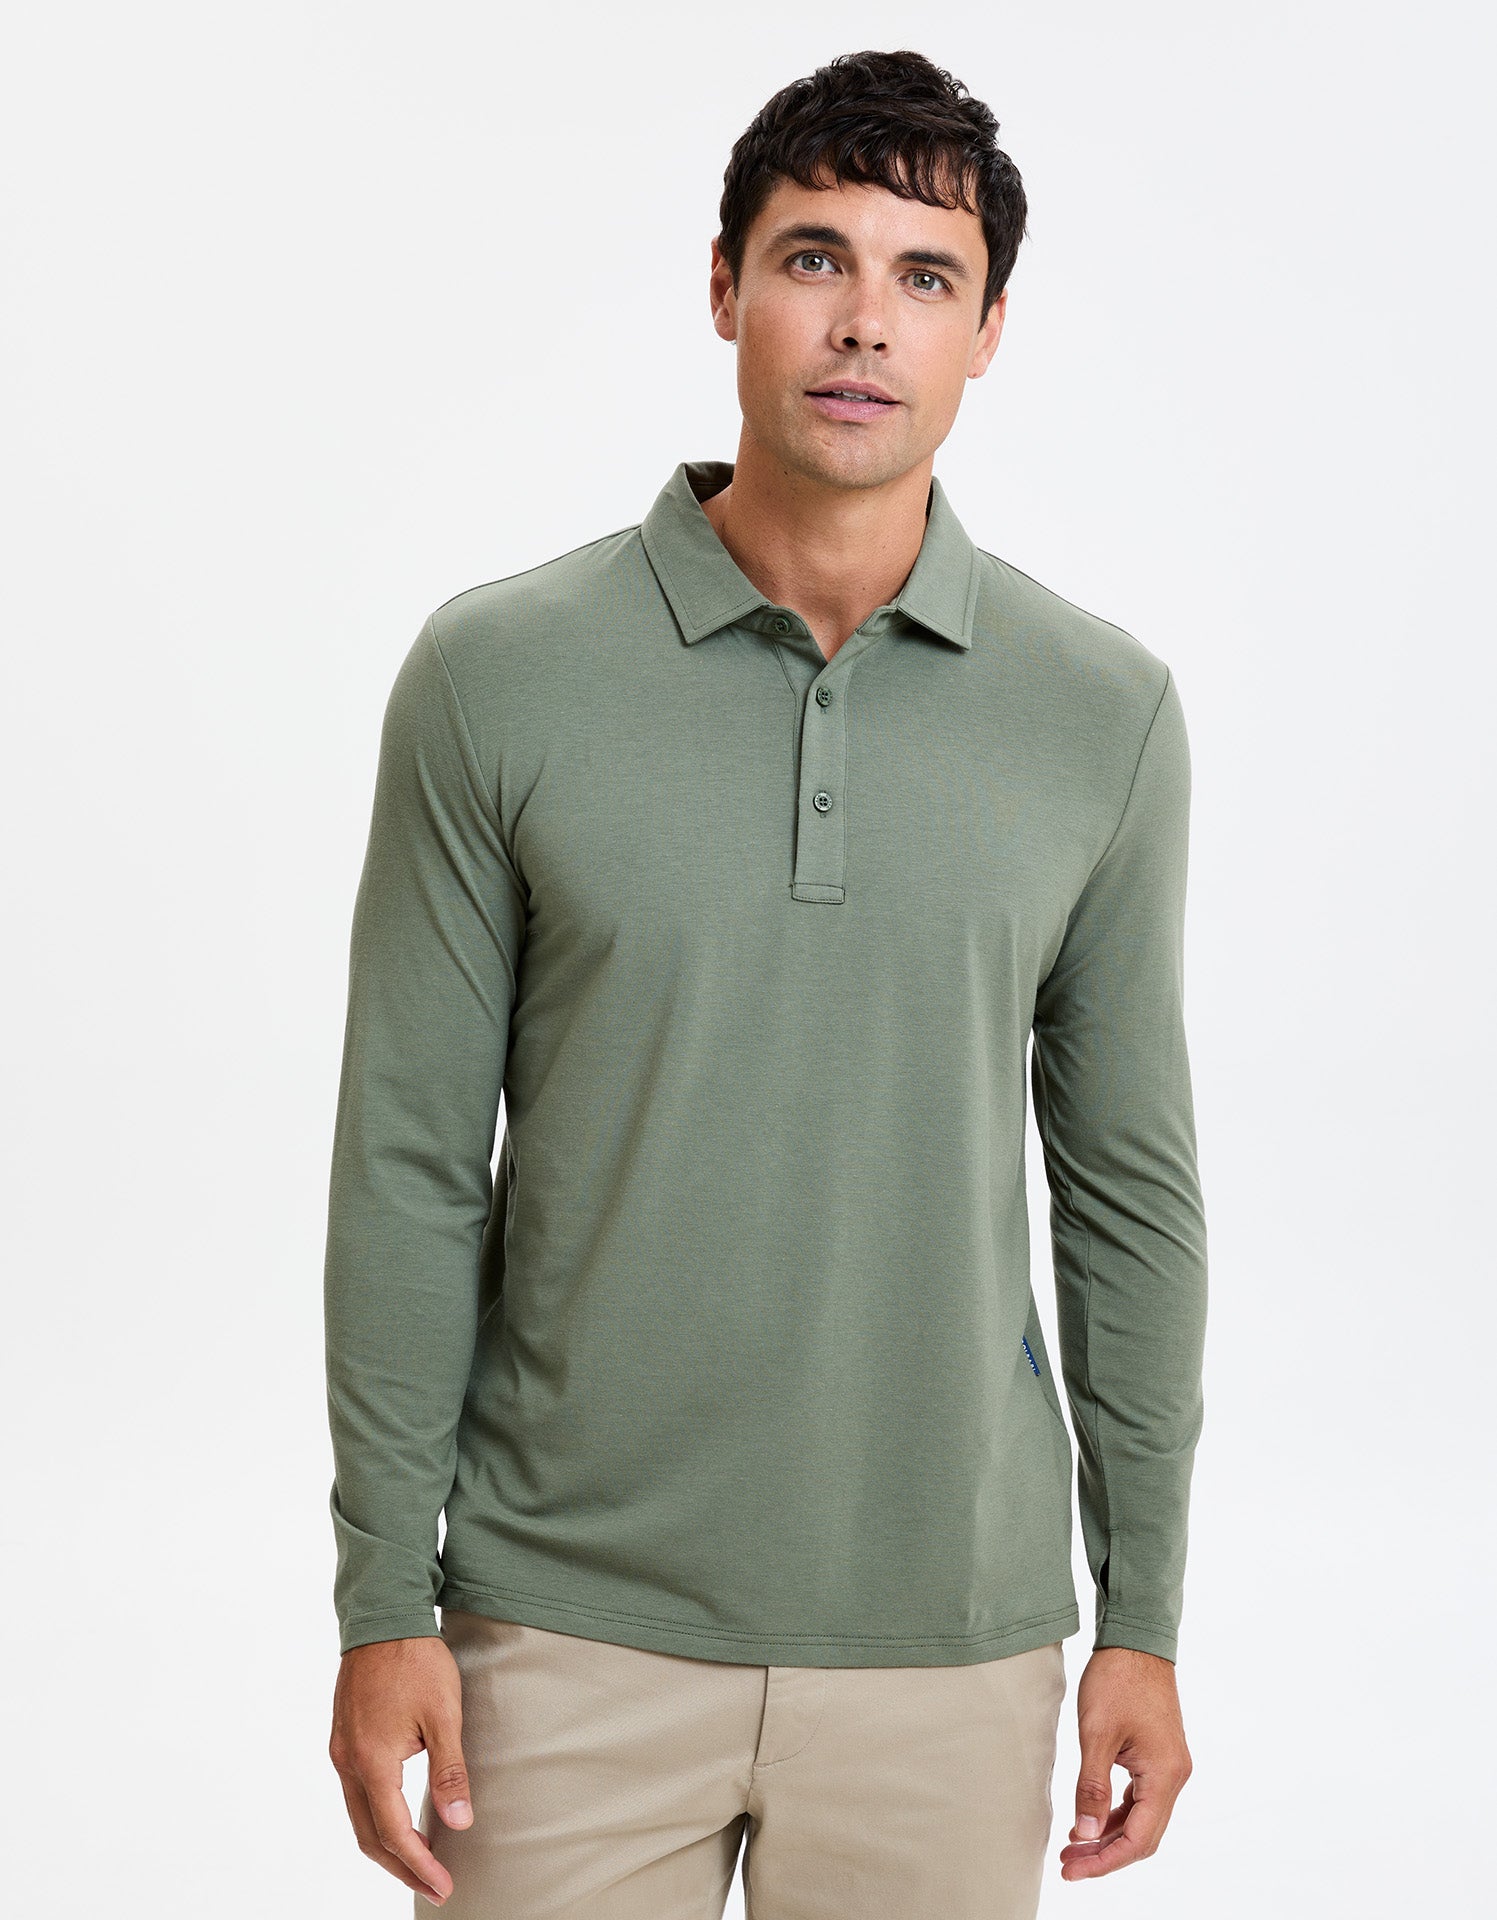 Sun Protective Long Sleeve Polo Shirt For Men UPF50+